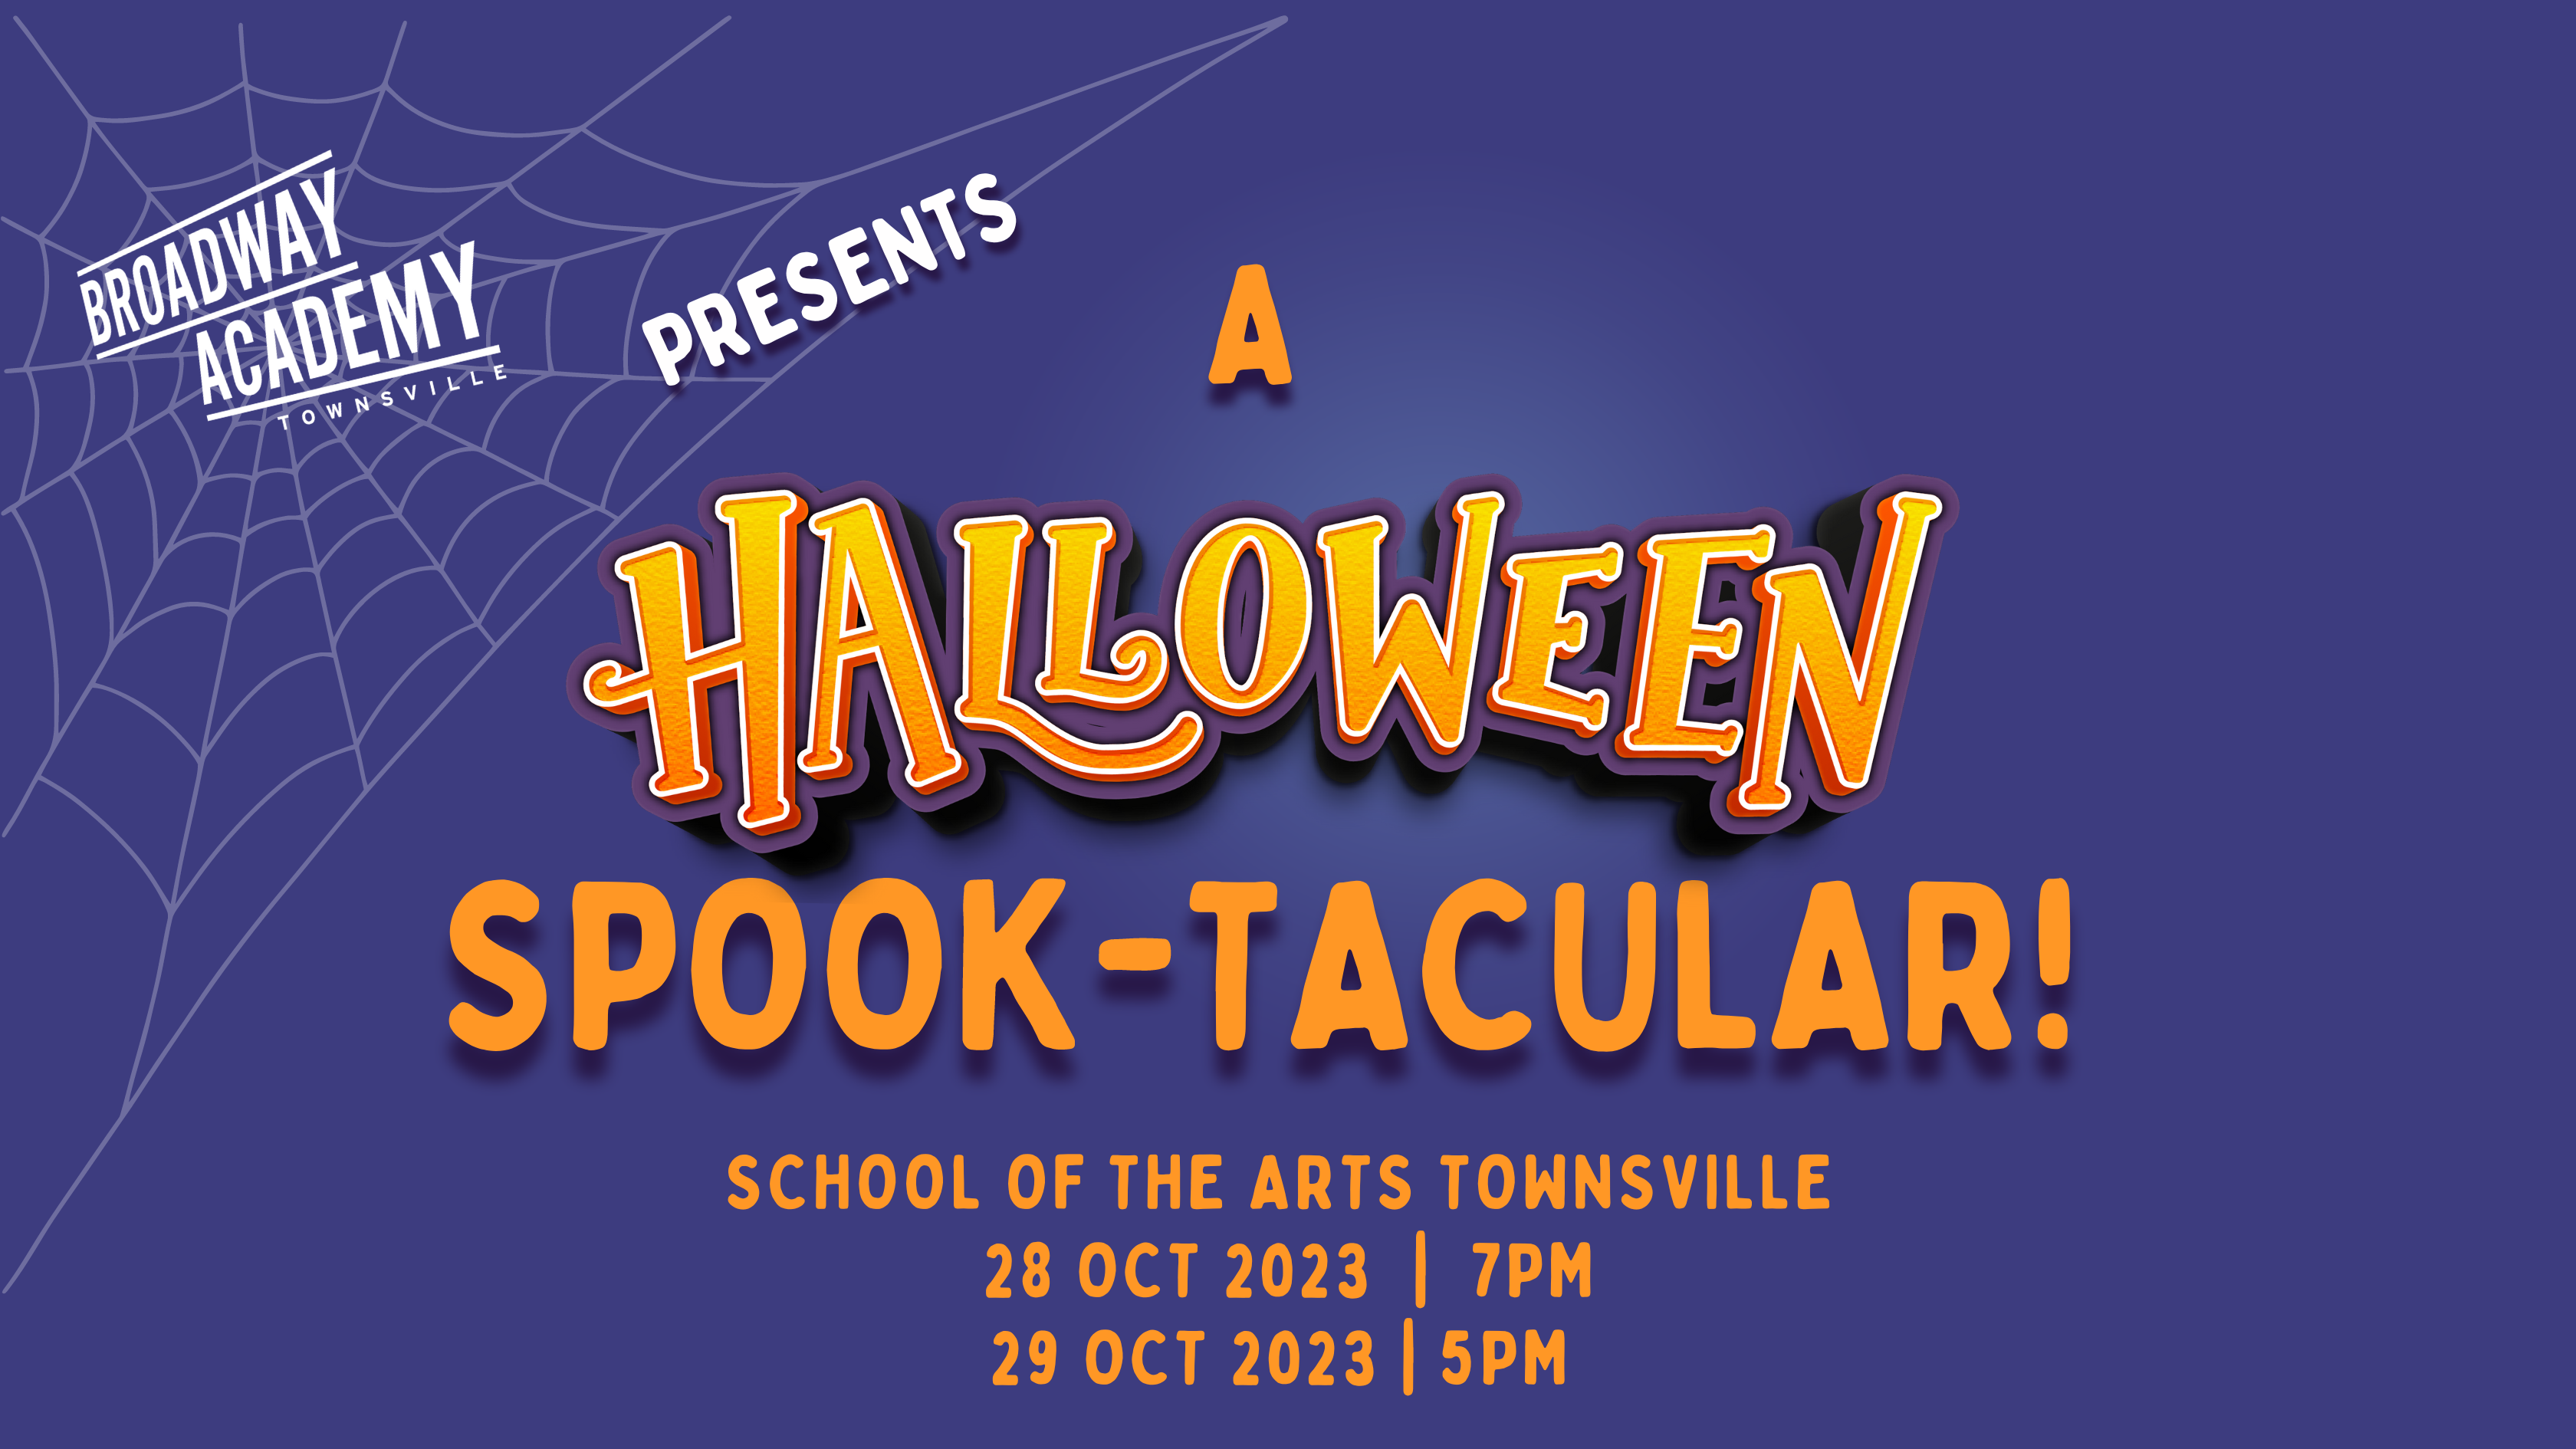 Broadway Academy Halloween Spooktacular Tickets, Dancenorth, Townsville  TryBooking Australia